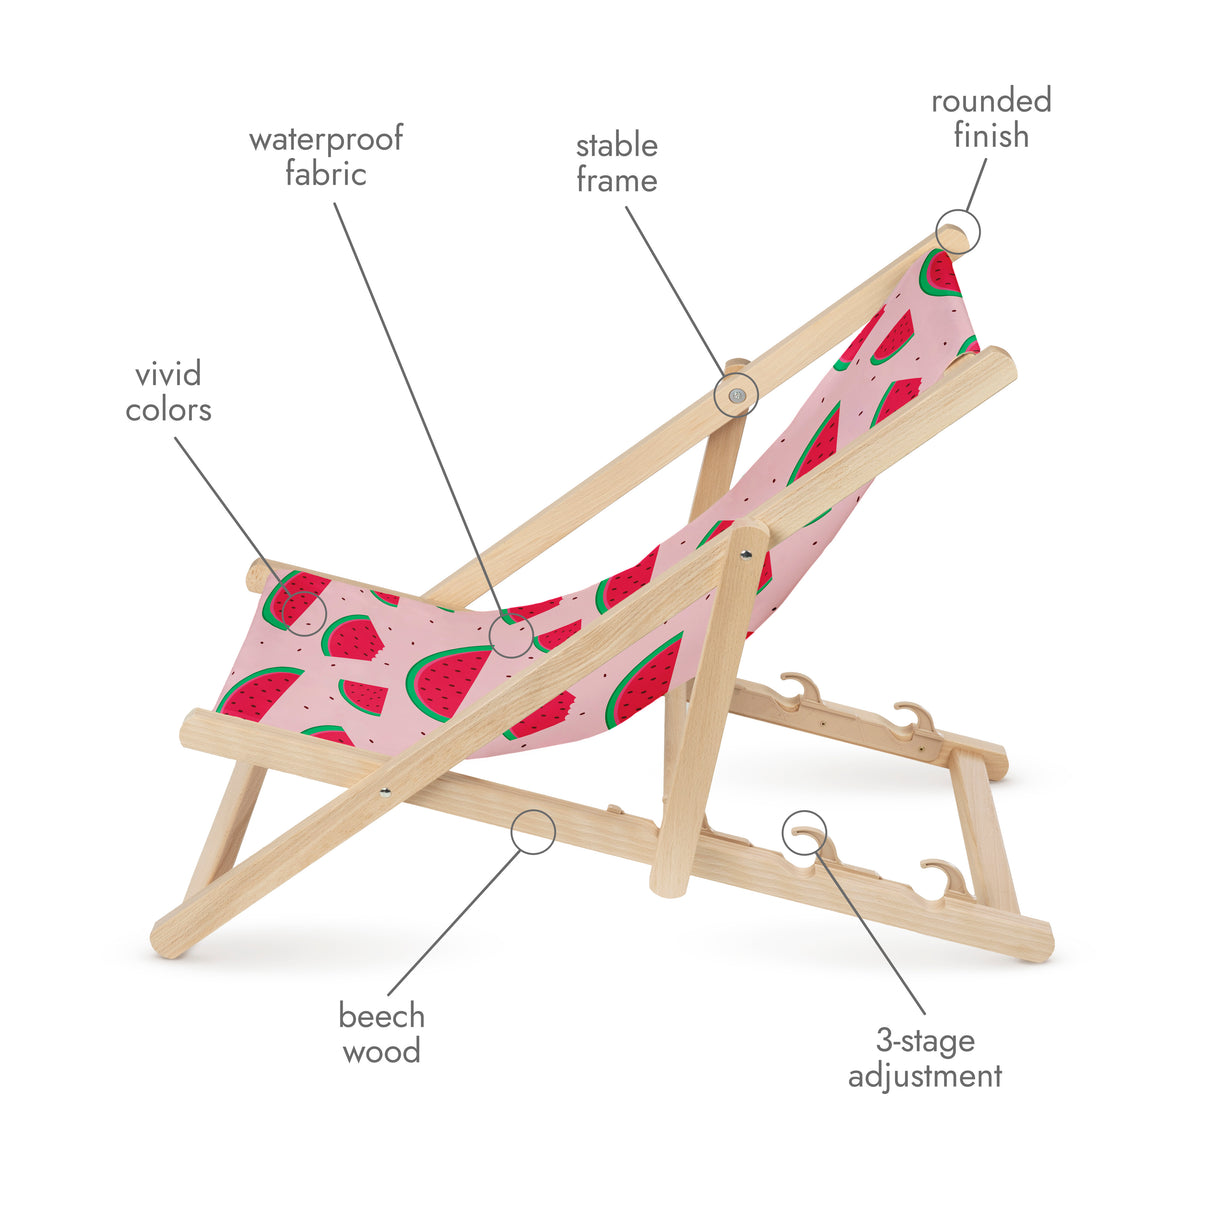 Kinderliegestuhl aus Holz Strawberry